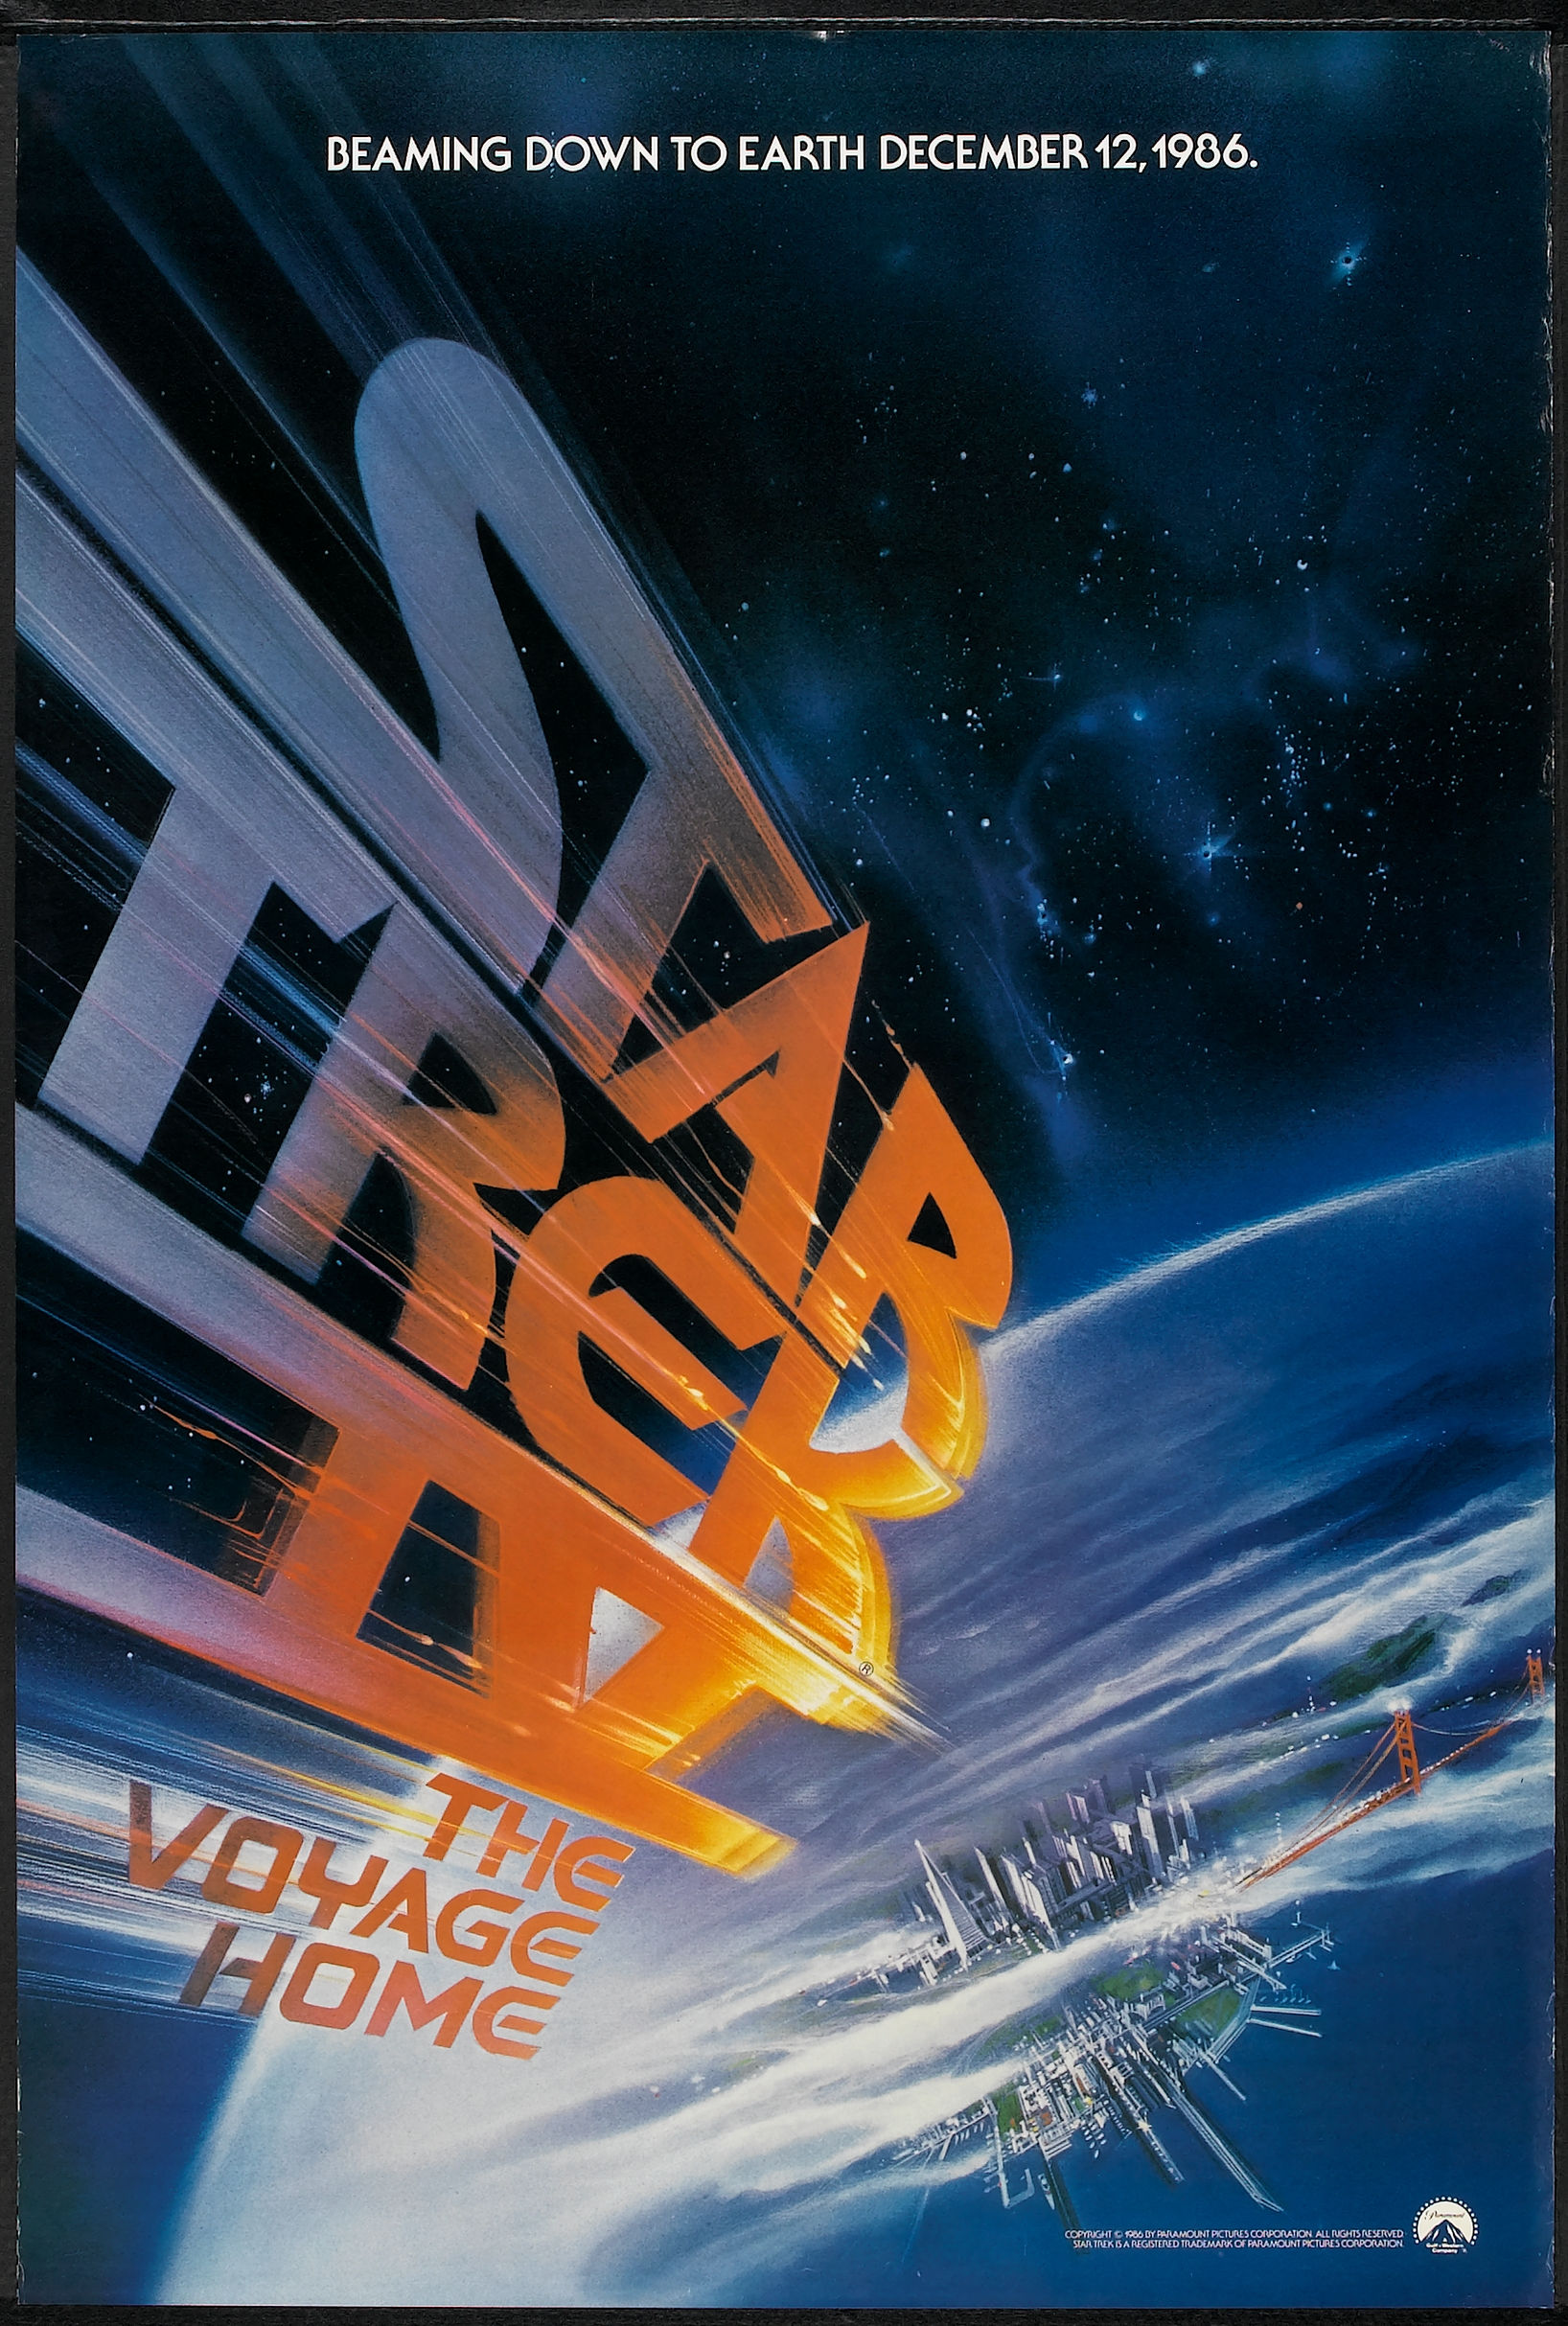 Star Trek IV: The Voyage Home Art